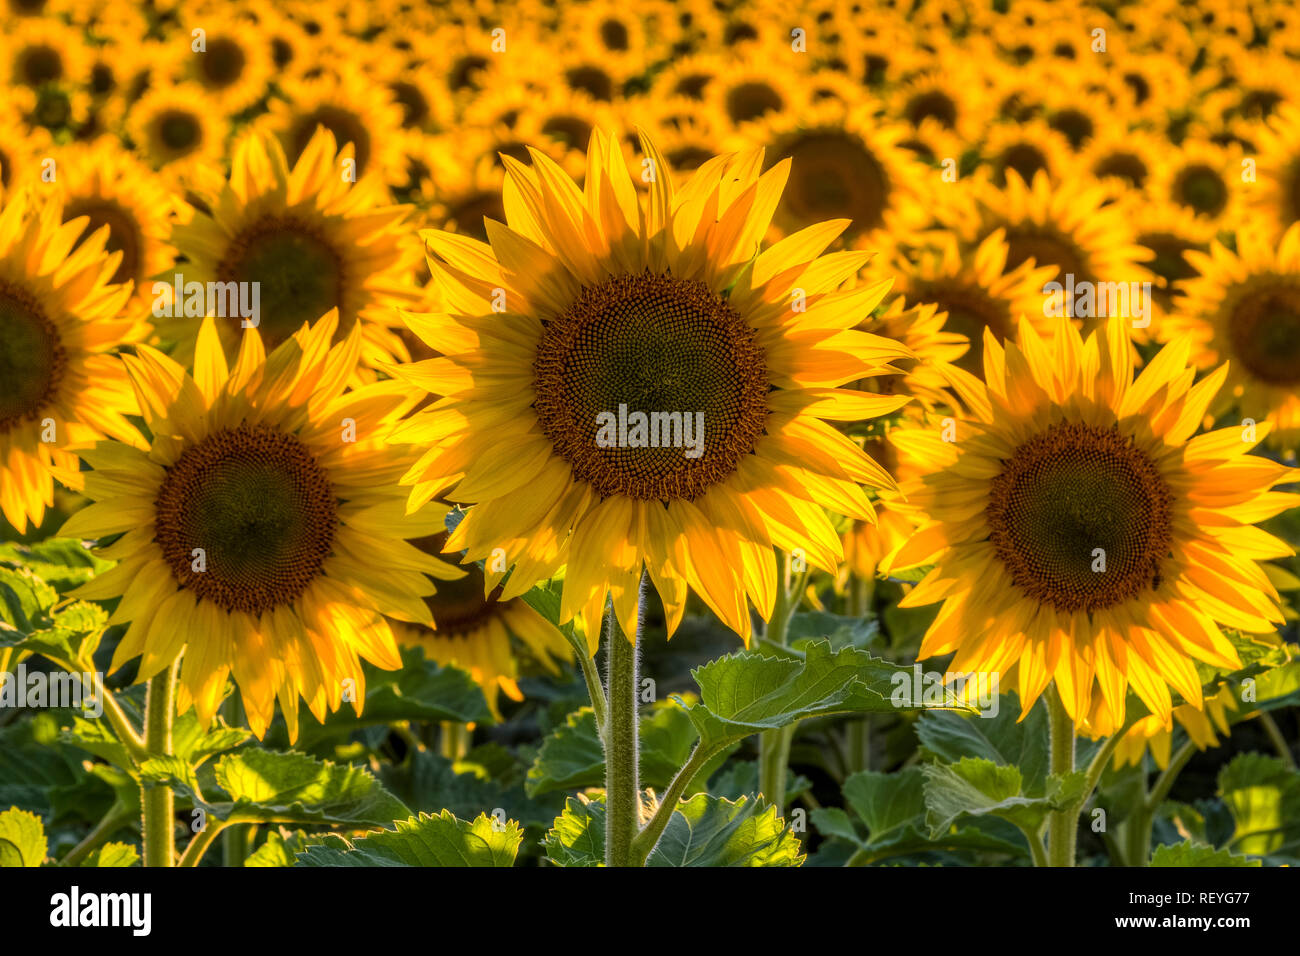 A field full of sunflowers in eastern Washington. Stock Photo